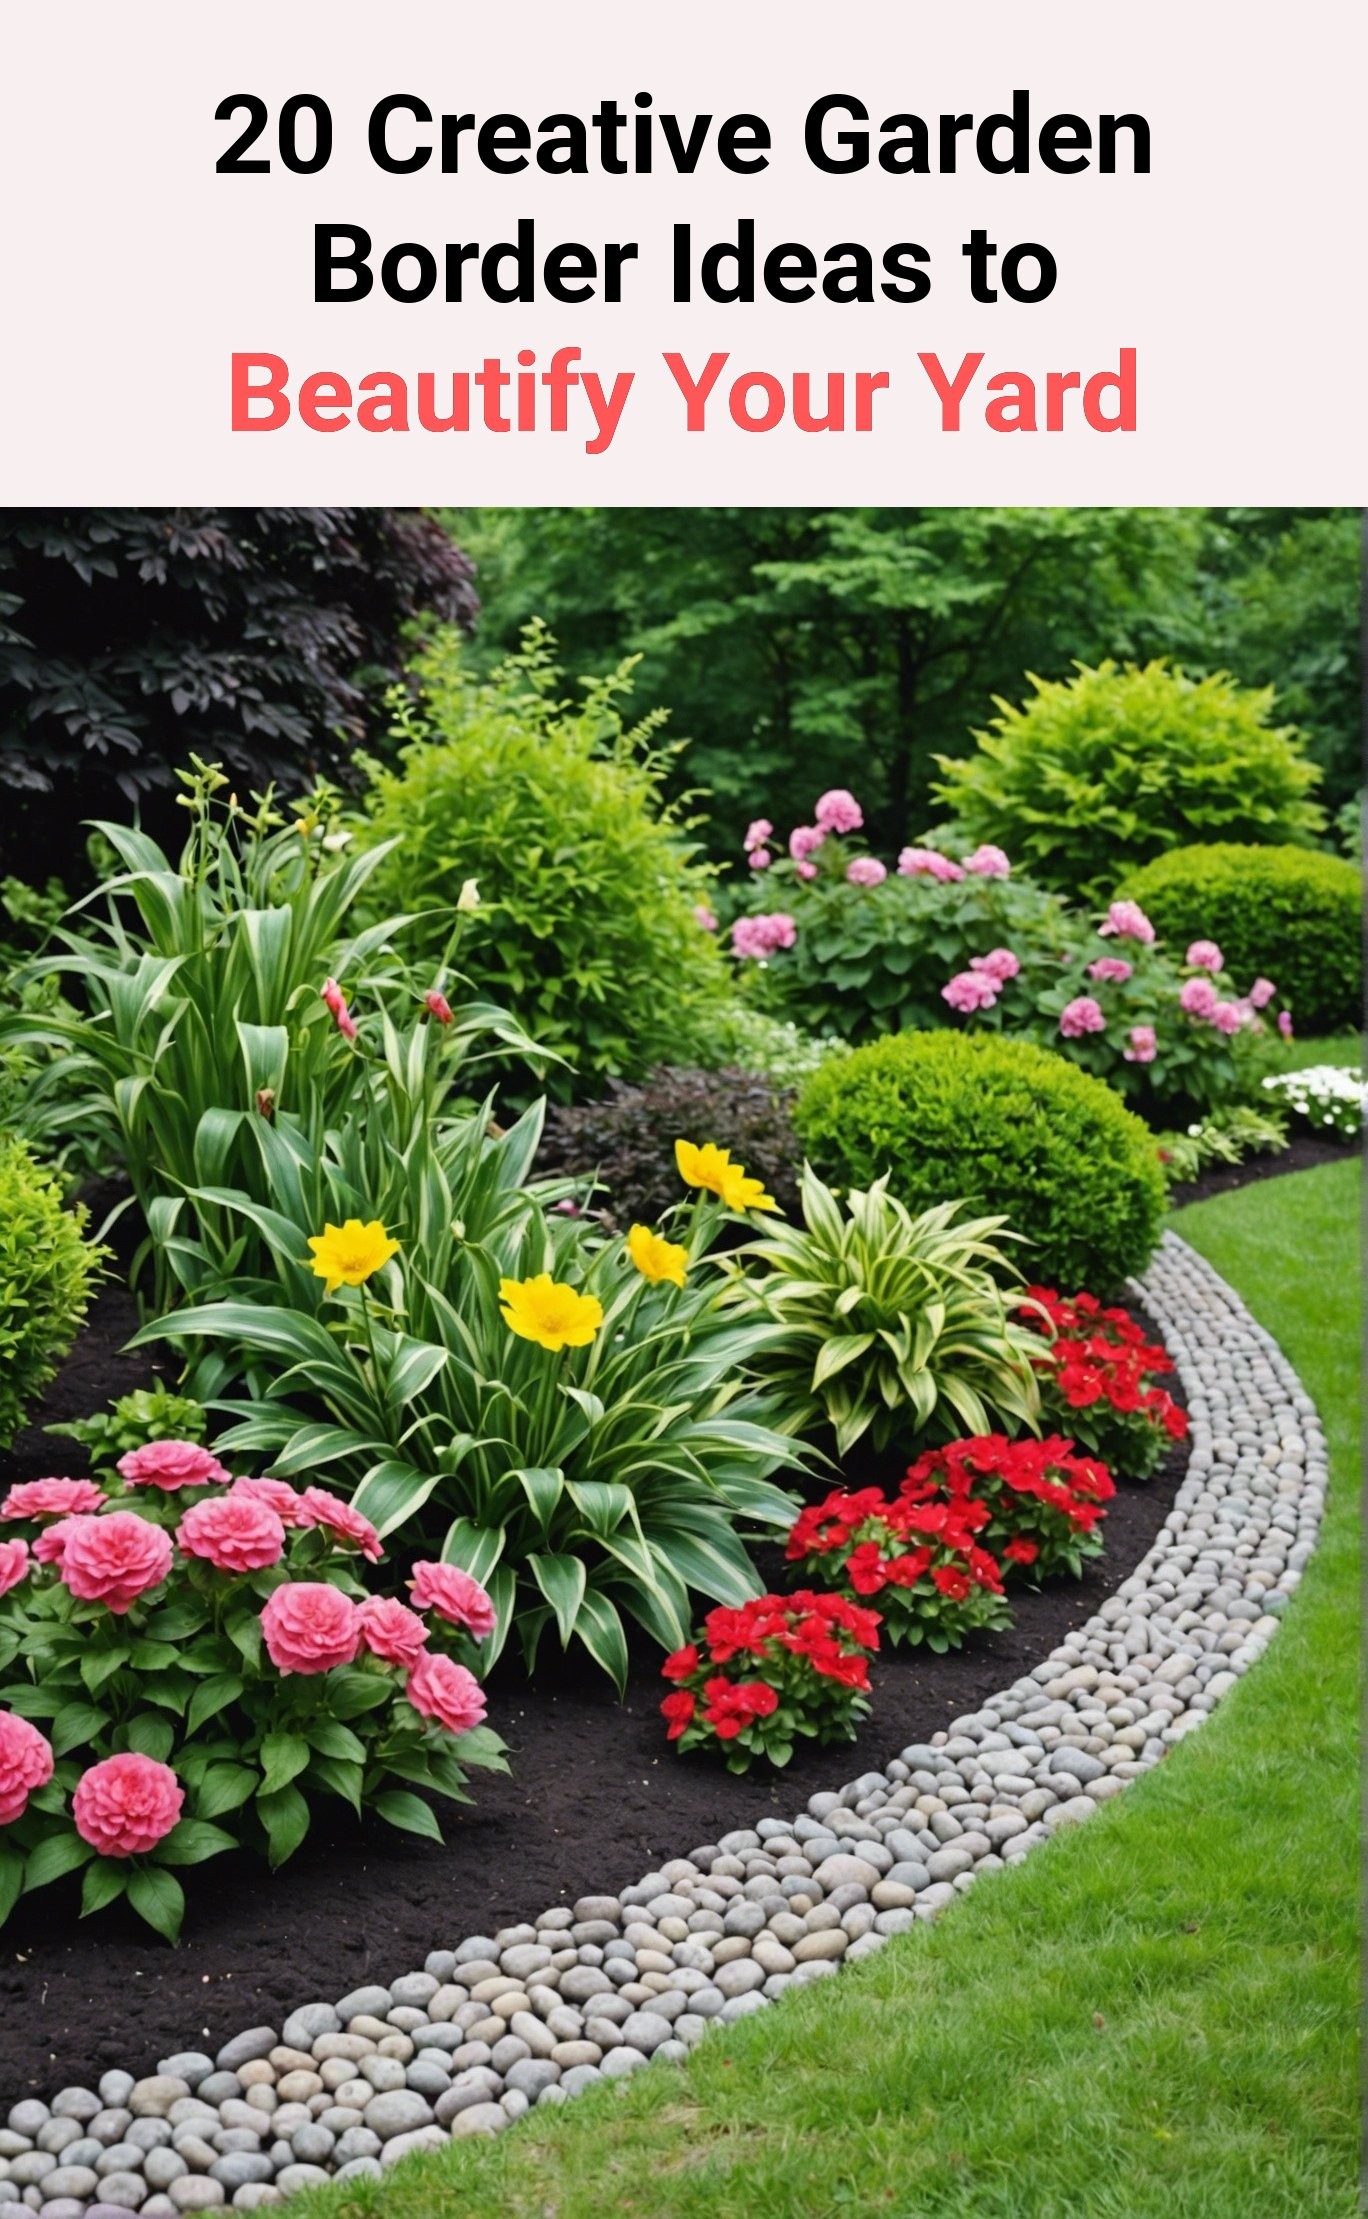 20 Creative Garden Border Ideas to Beautify Your Yard